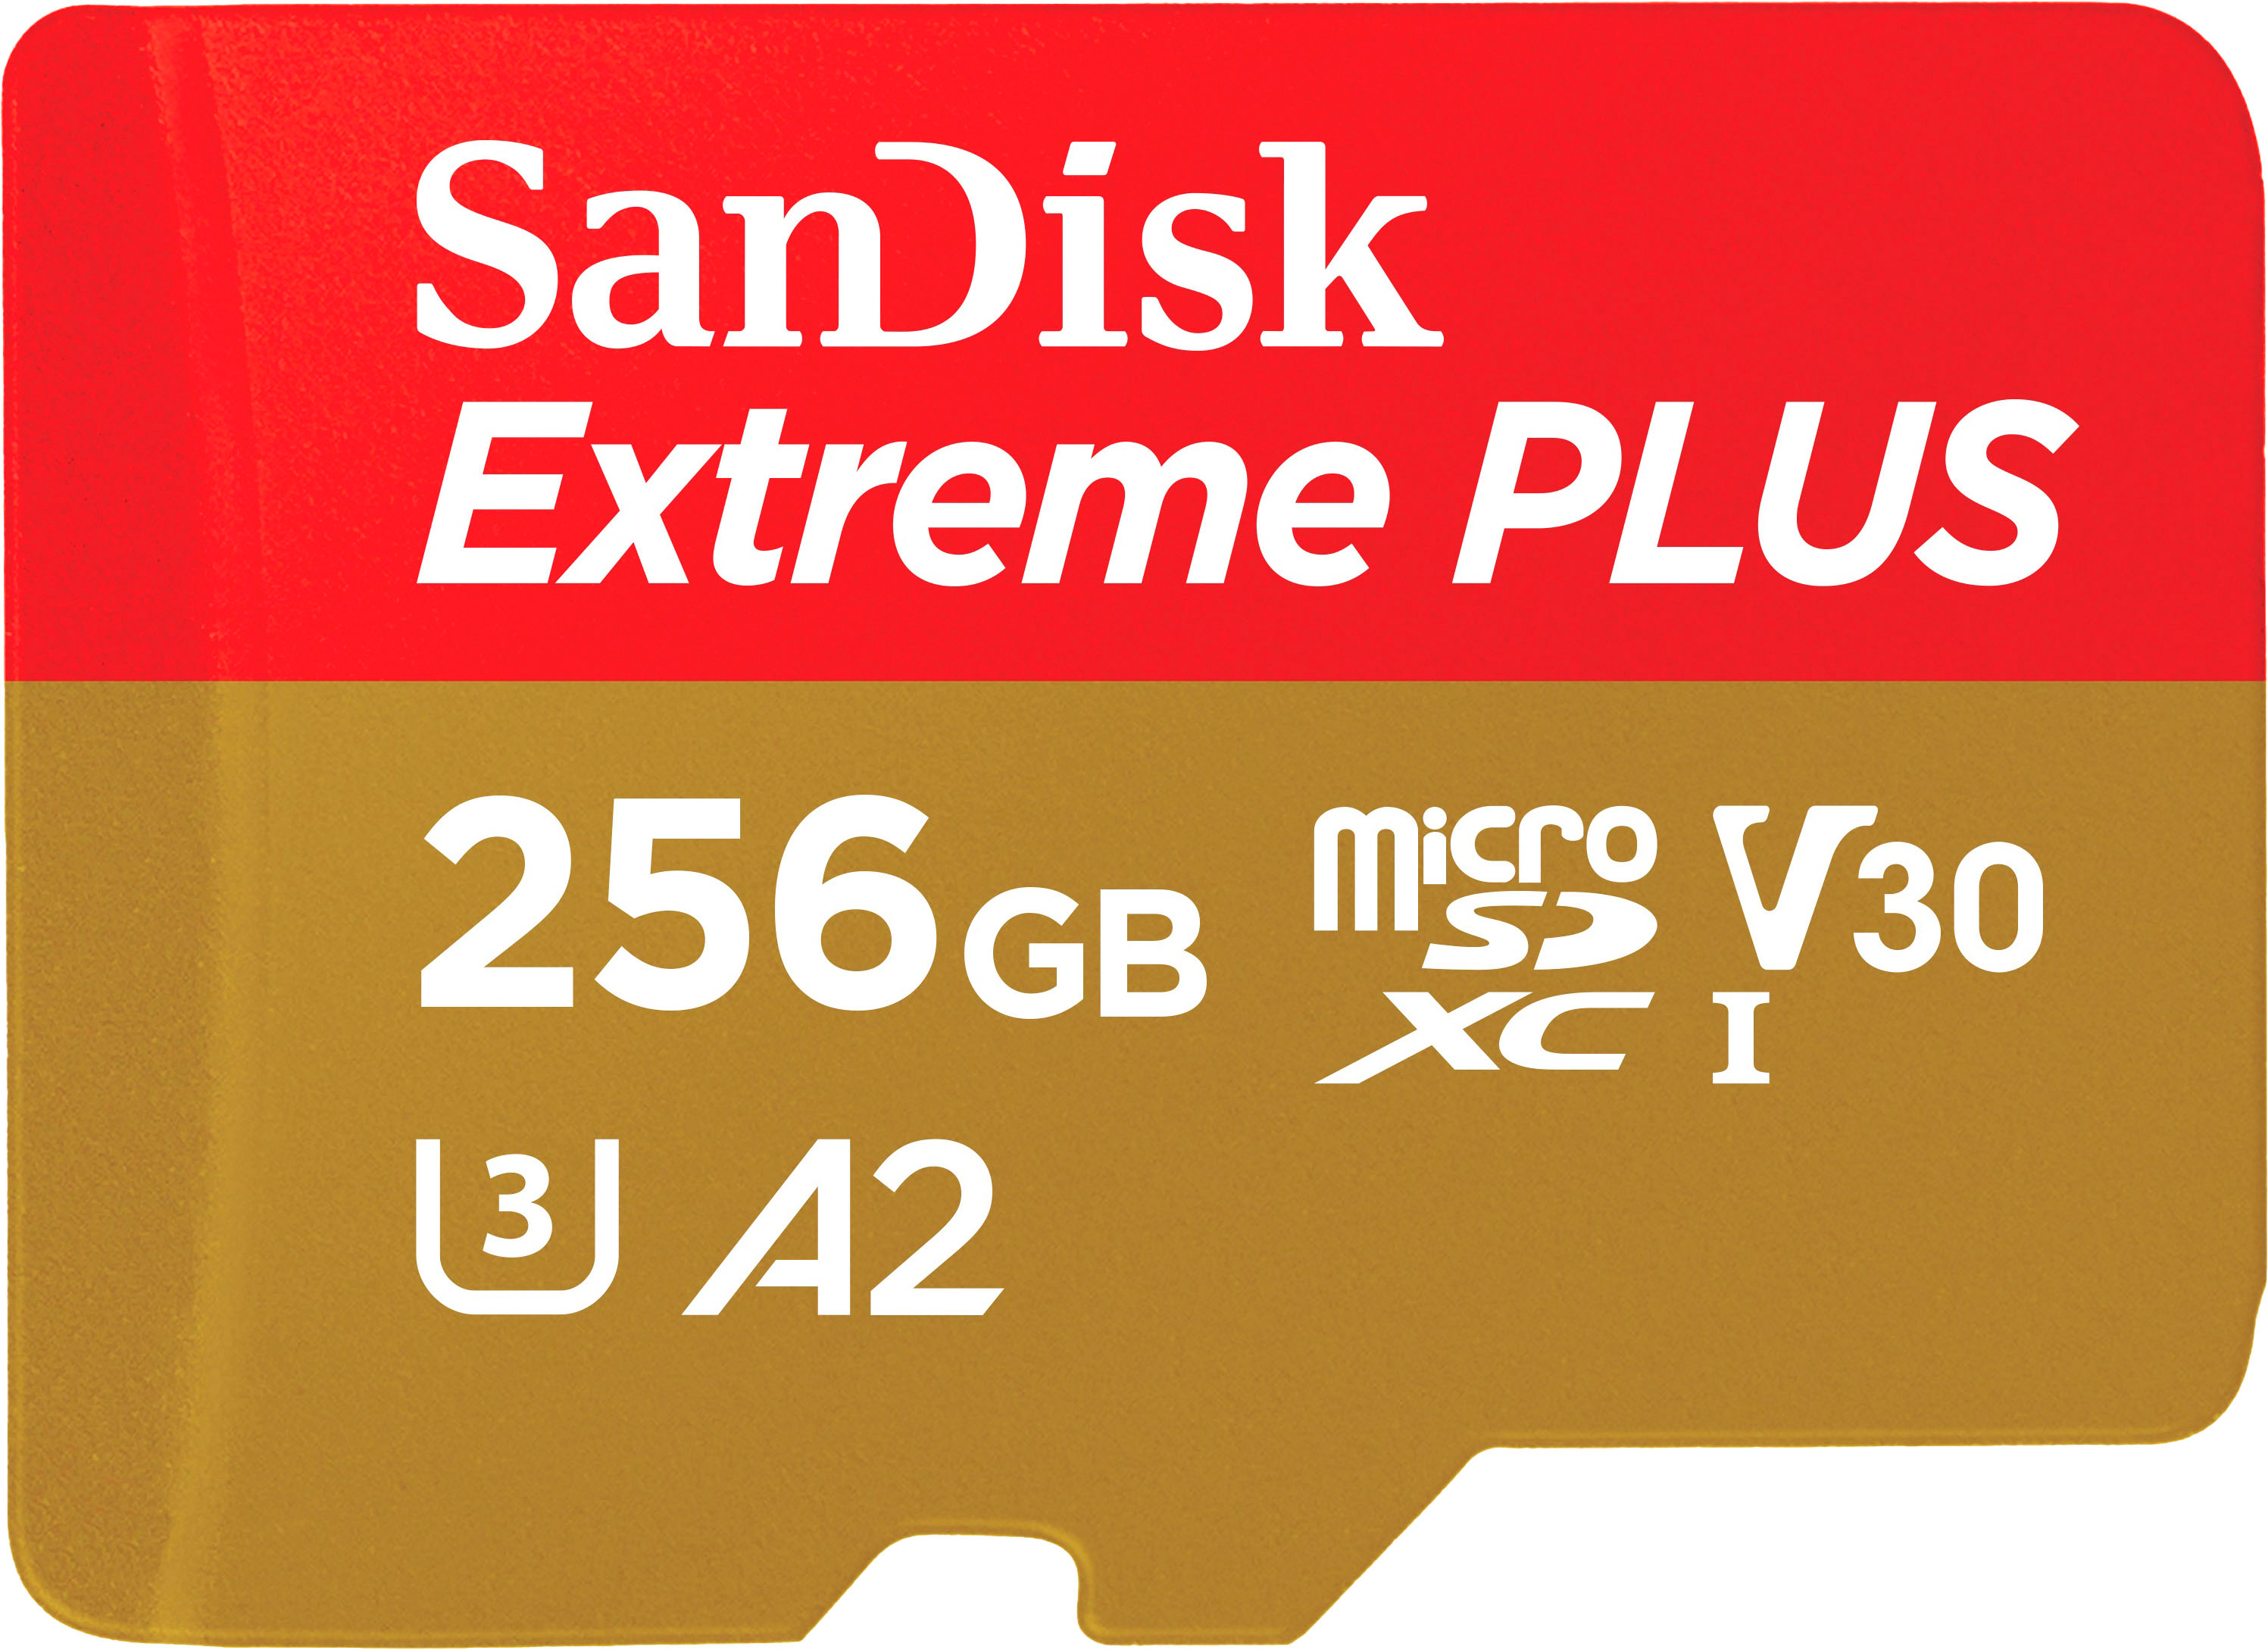 SanDisk Ultra microSD 32 Go MicroSDHC UHS-I Classe 10